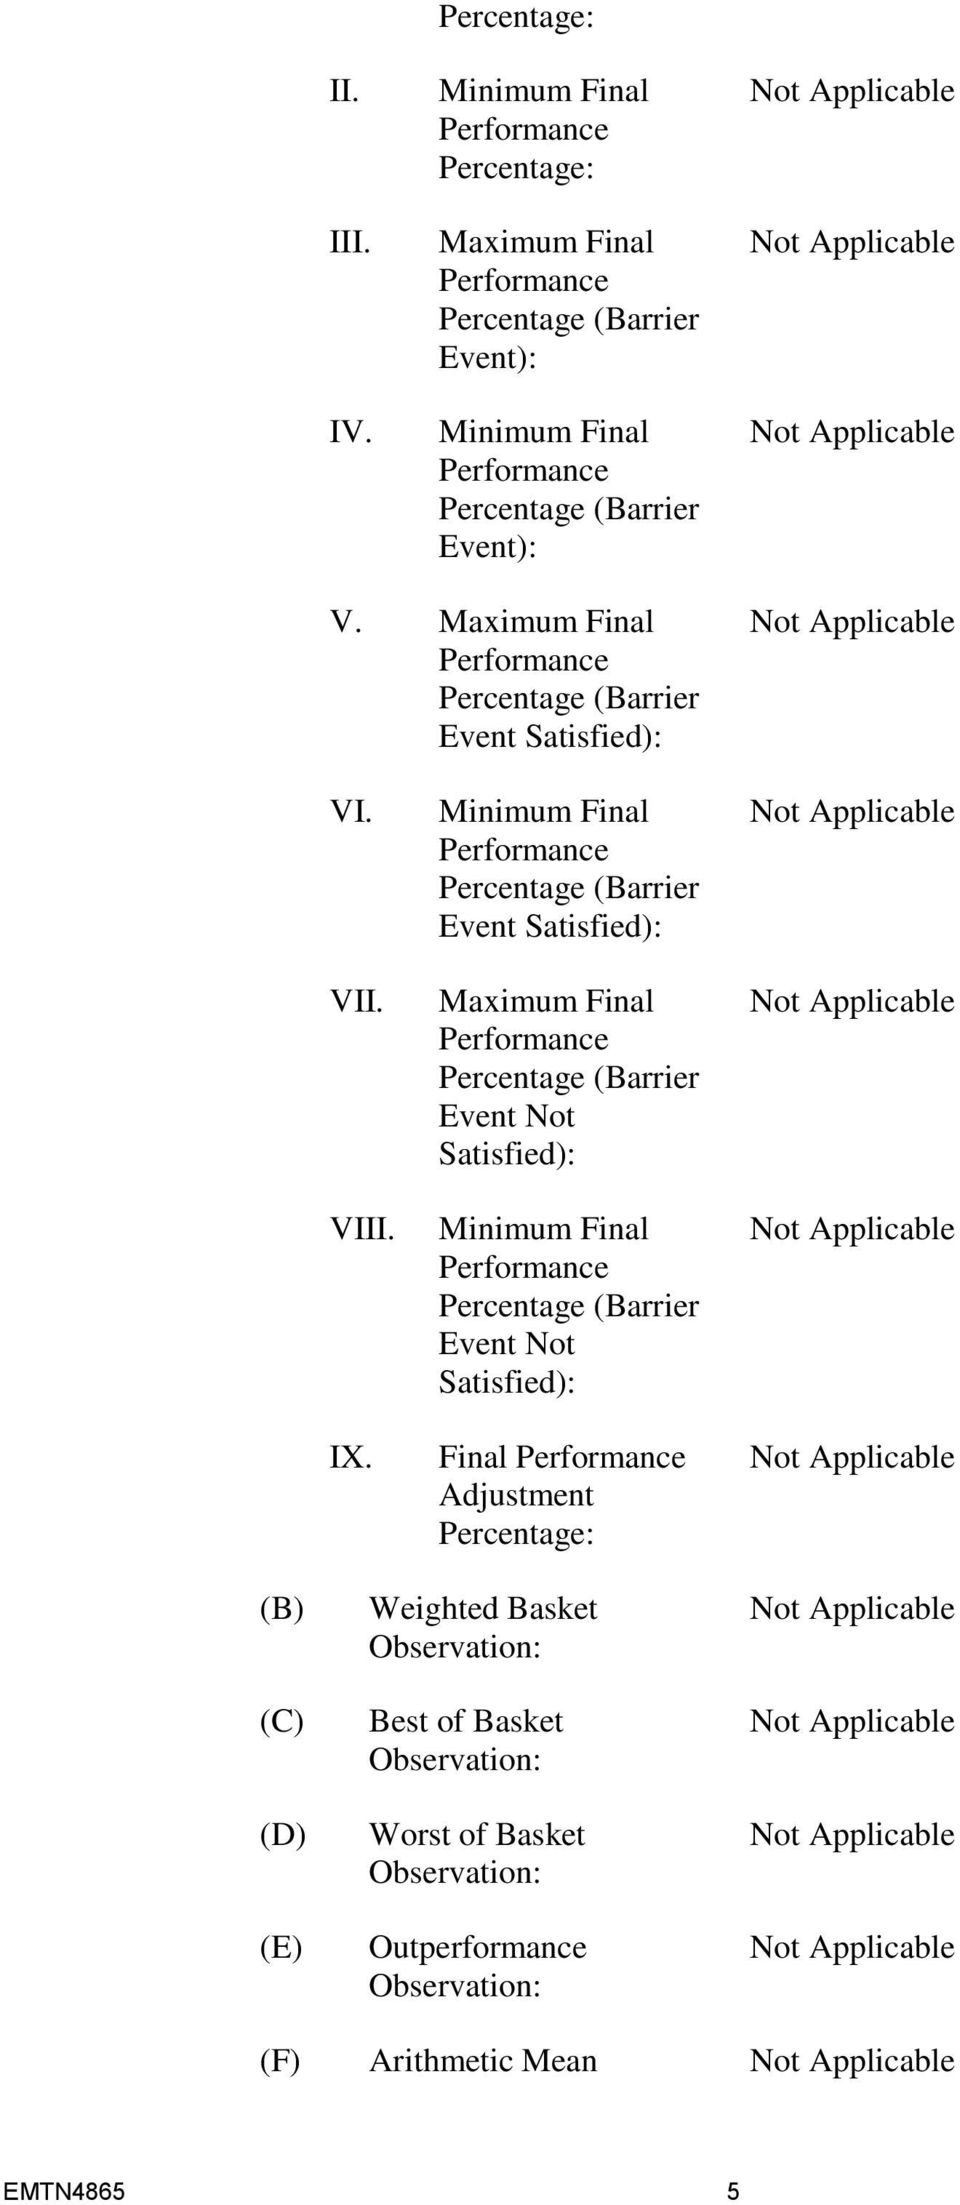 Maximum Final Performance Percentage (Barrier Event Satisfied): VI. VII. VIII. IX.